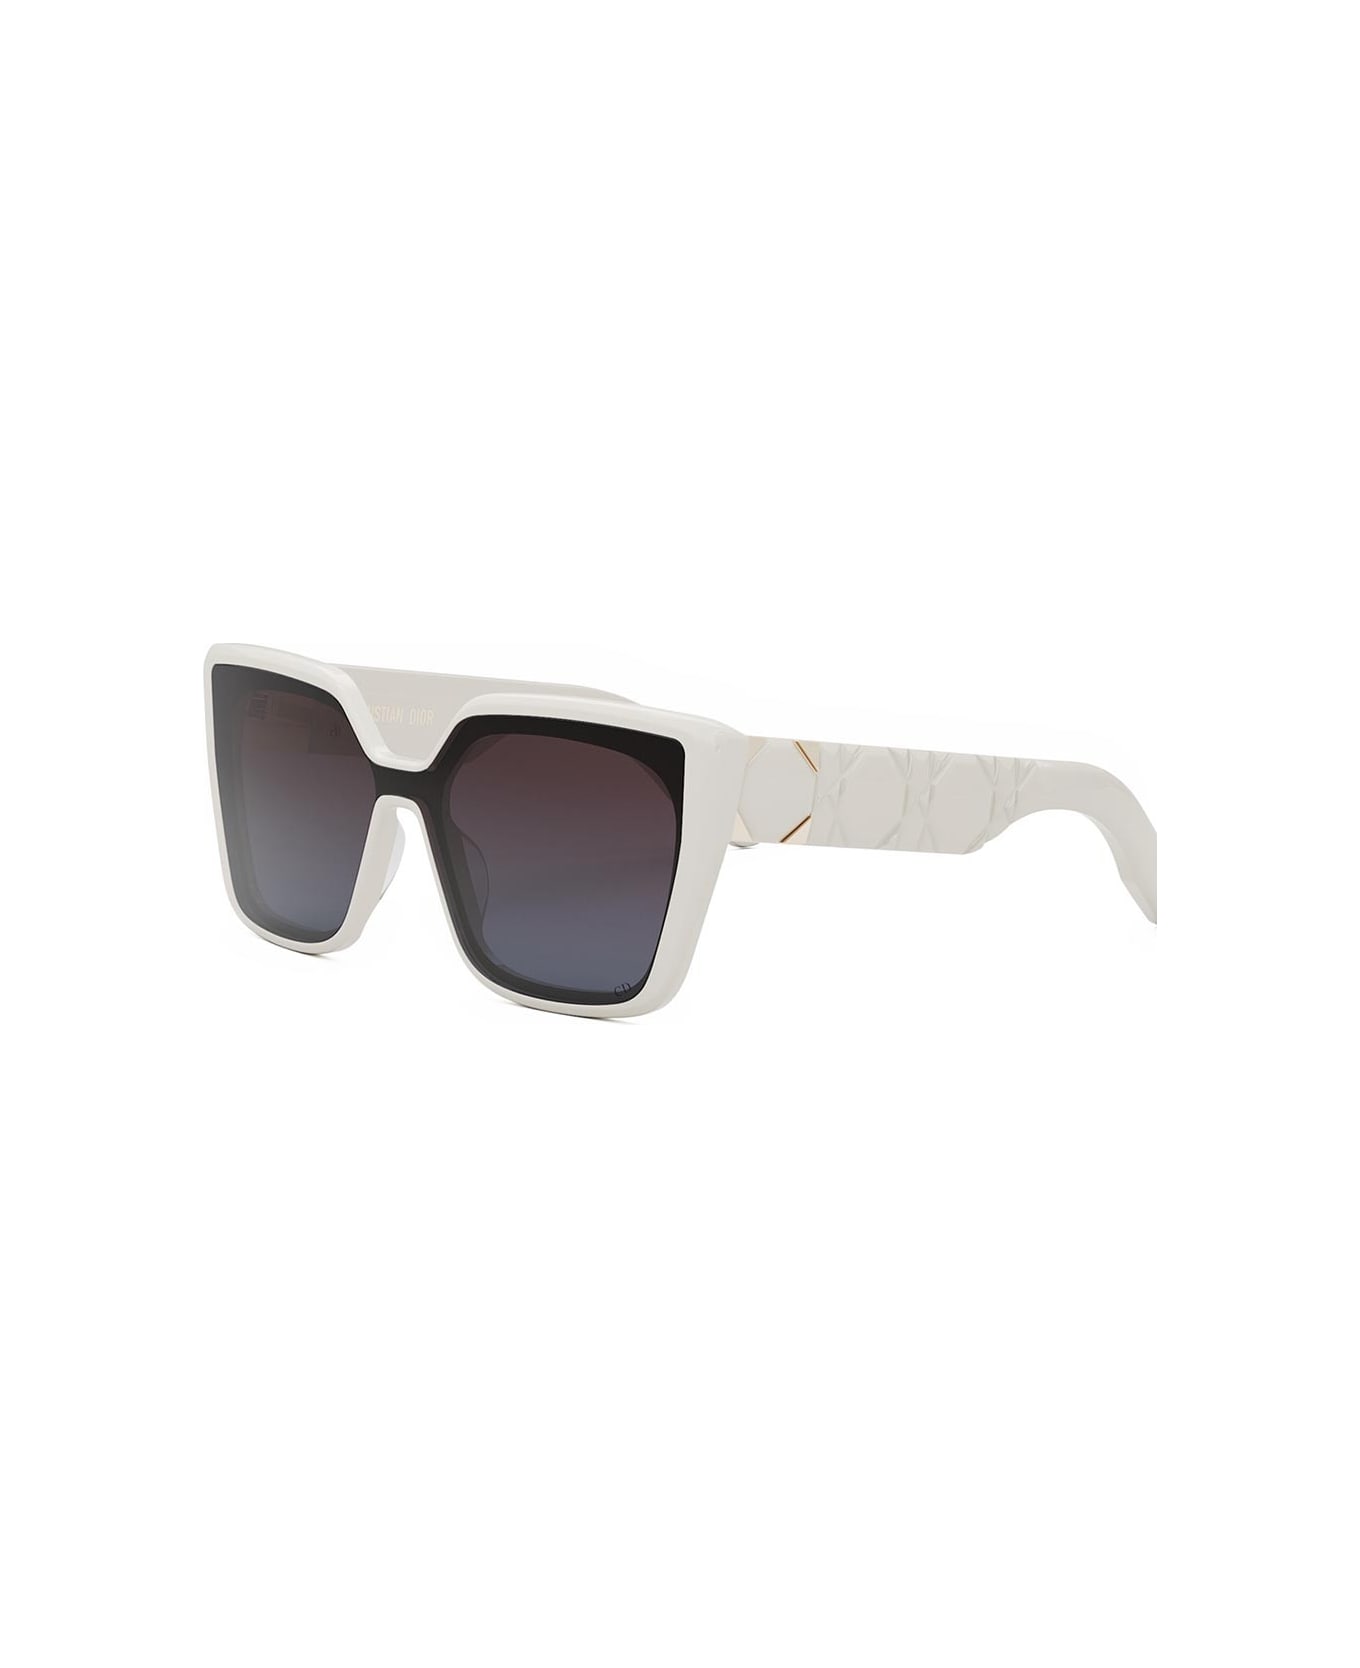 Dior Eyewear Sunglasses - Bianco/Bordeaux sfumato